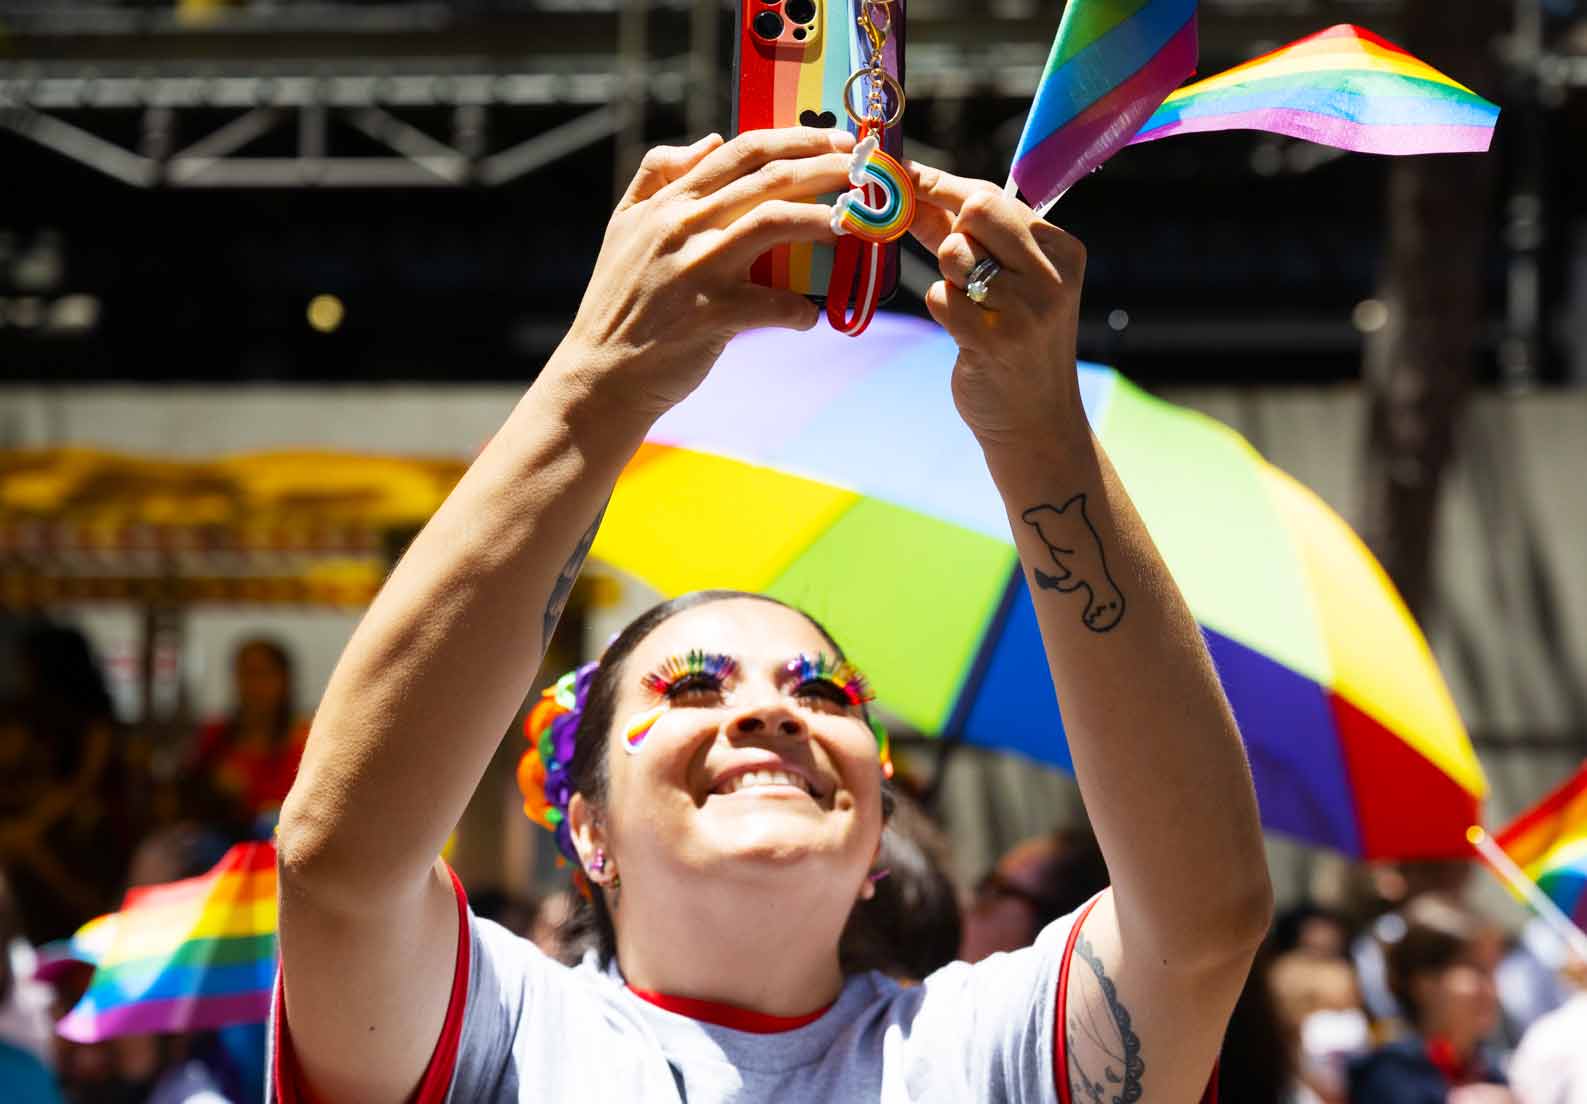 LGBTQ Influencer holding rainbow phone